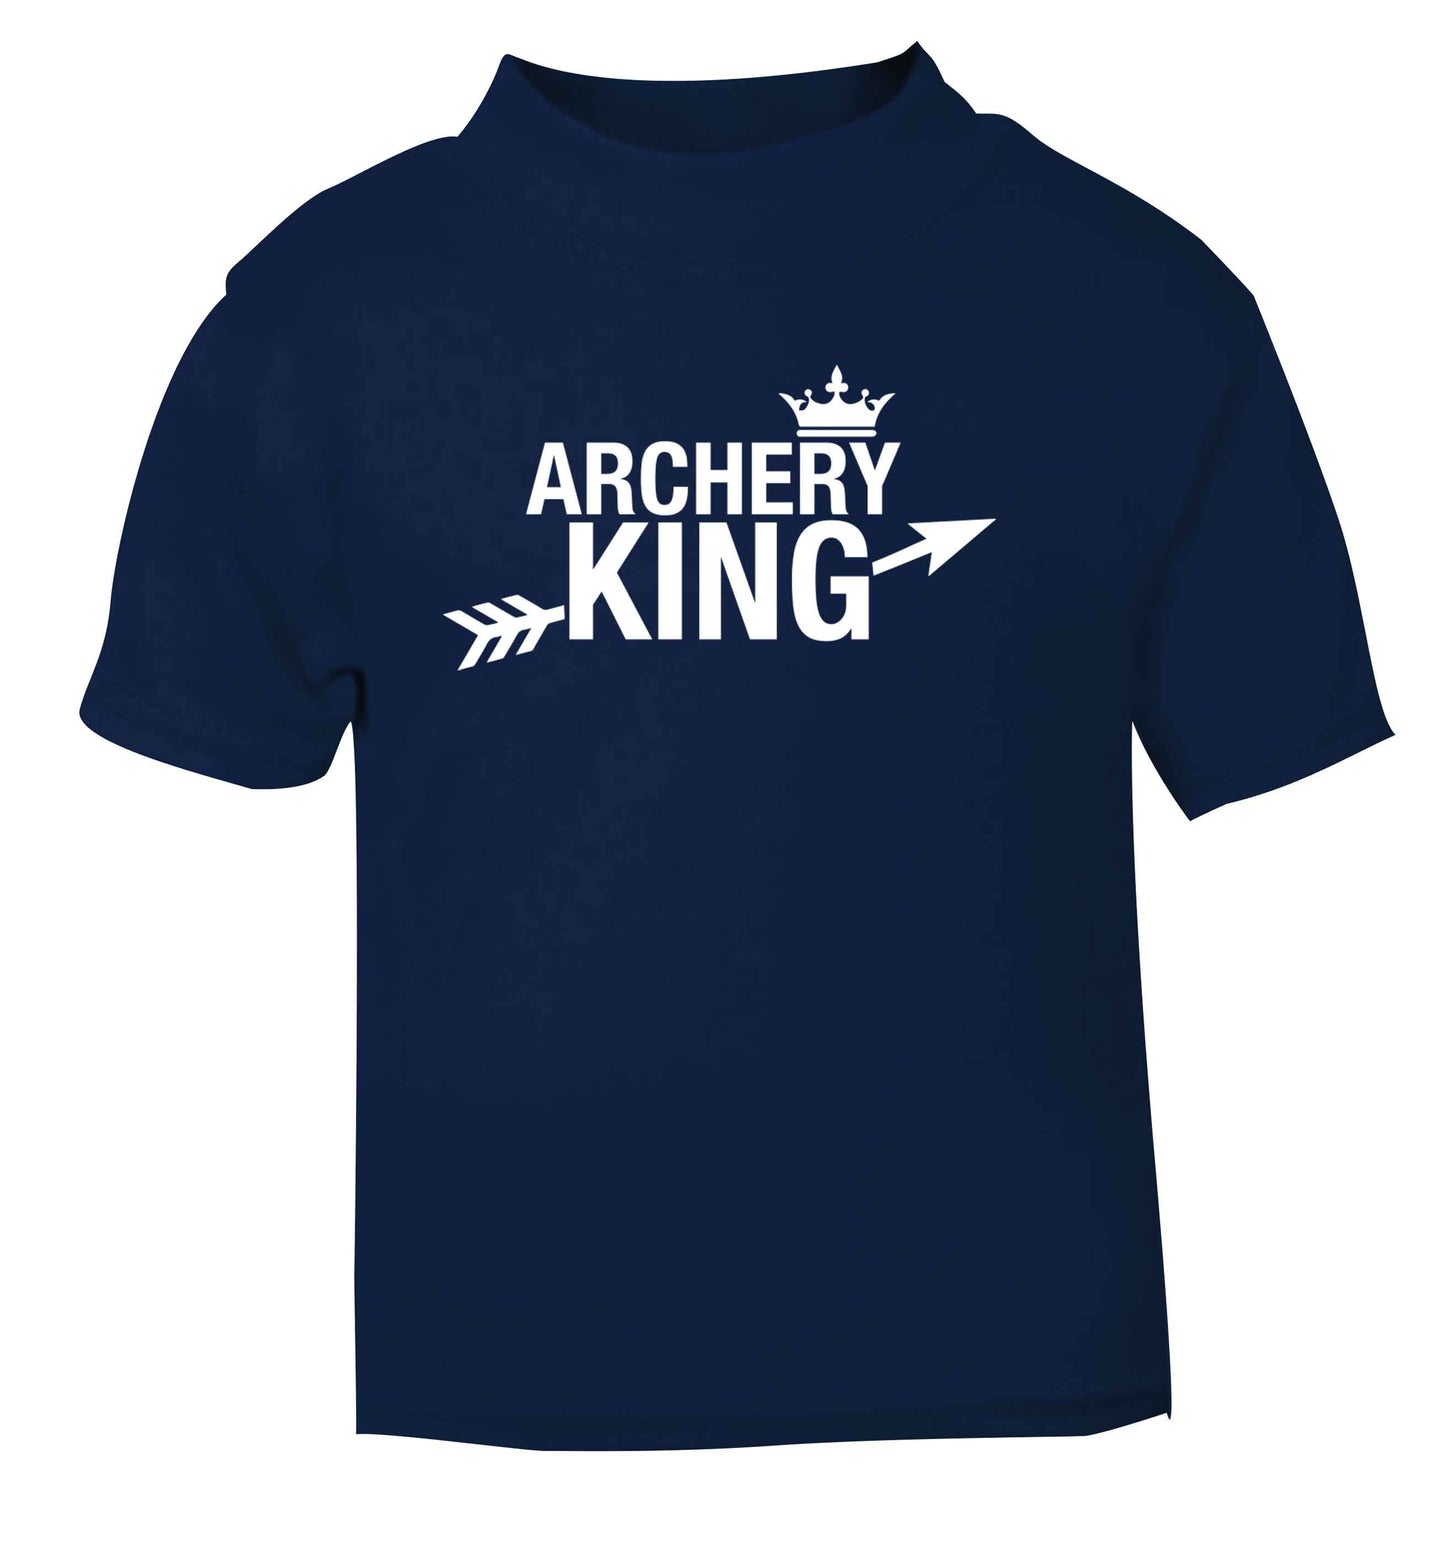 Archery king navy Baby Toddler Tshirt 2 Years